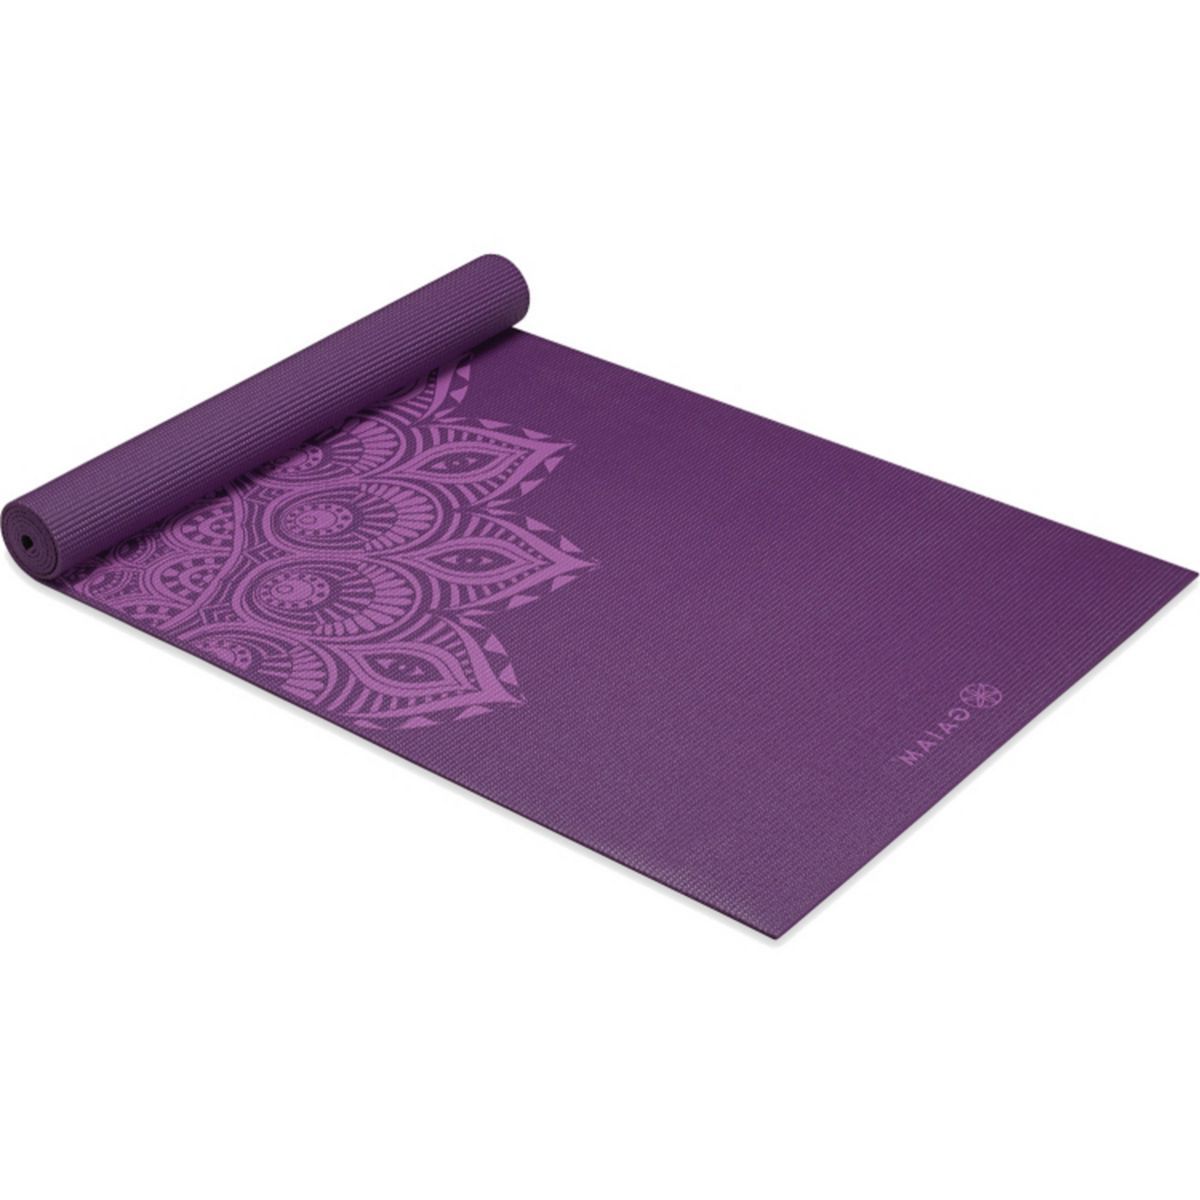 Gaiam 6mm Premium Print Yoga Mat